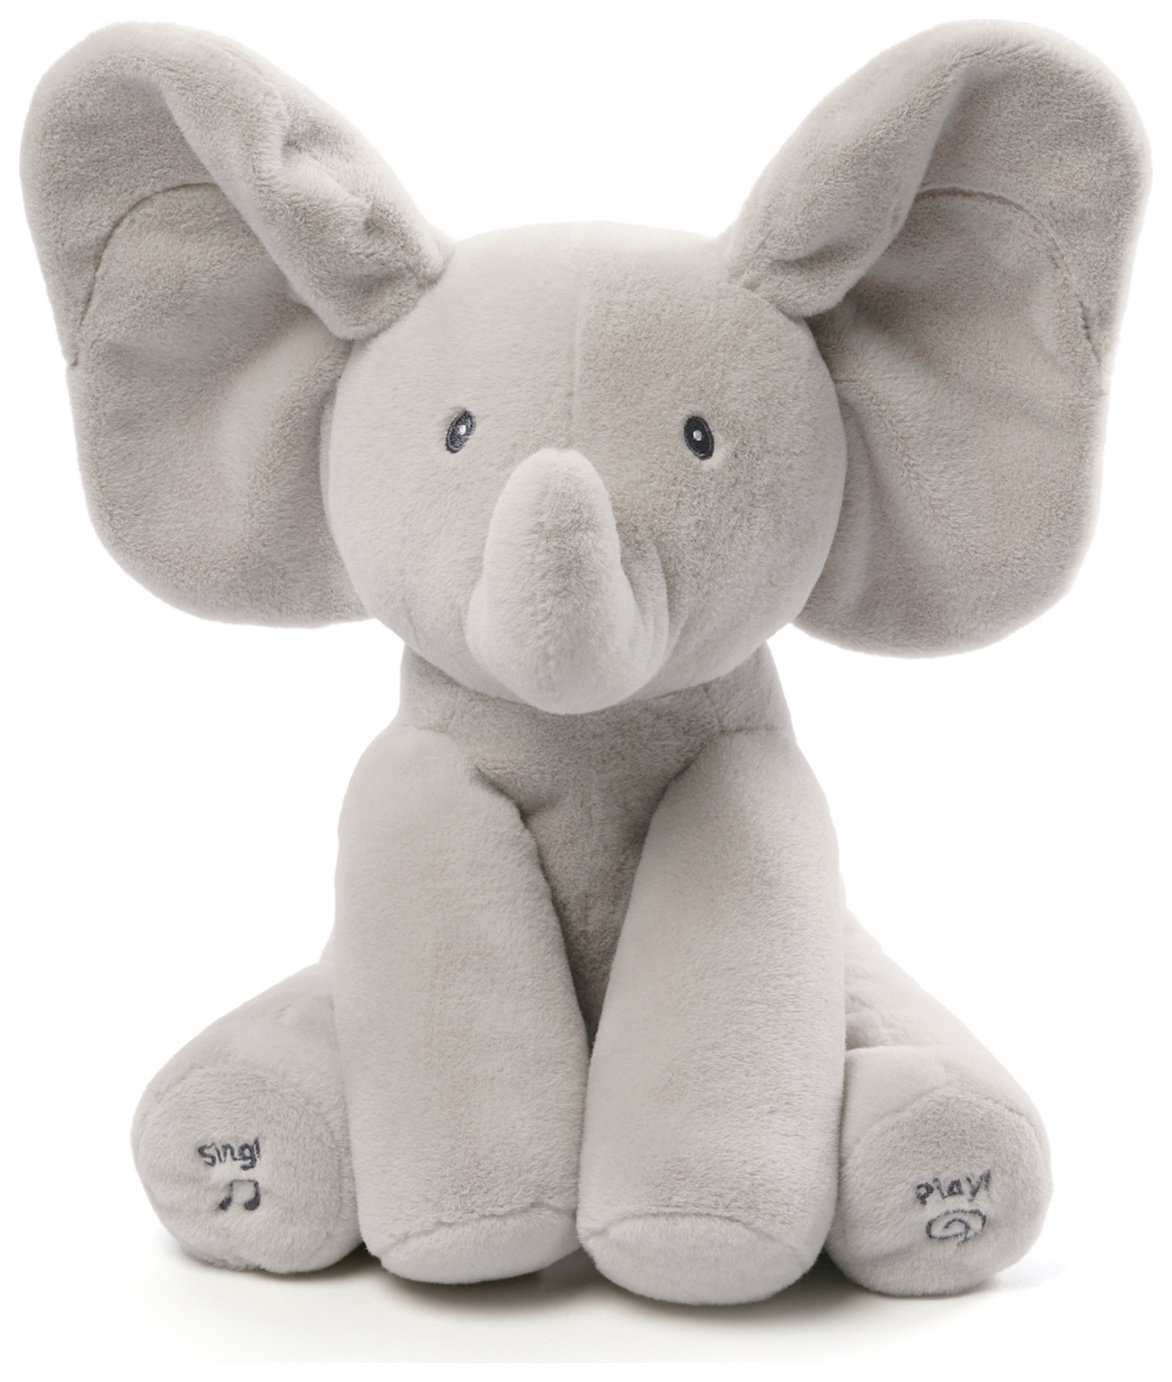 toy baby elephant